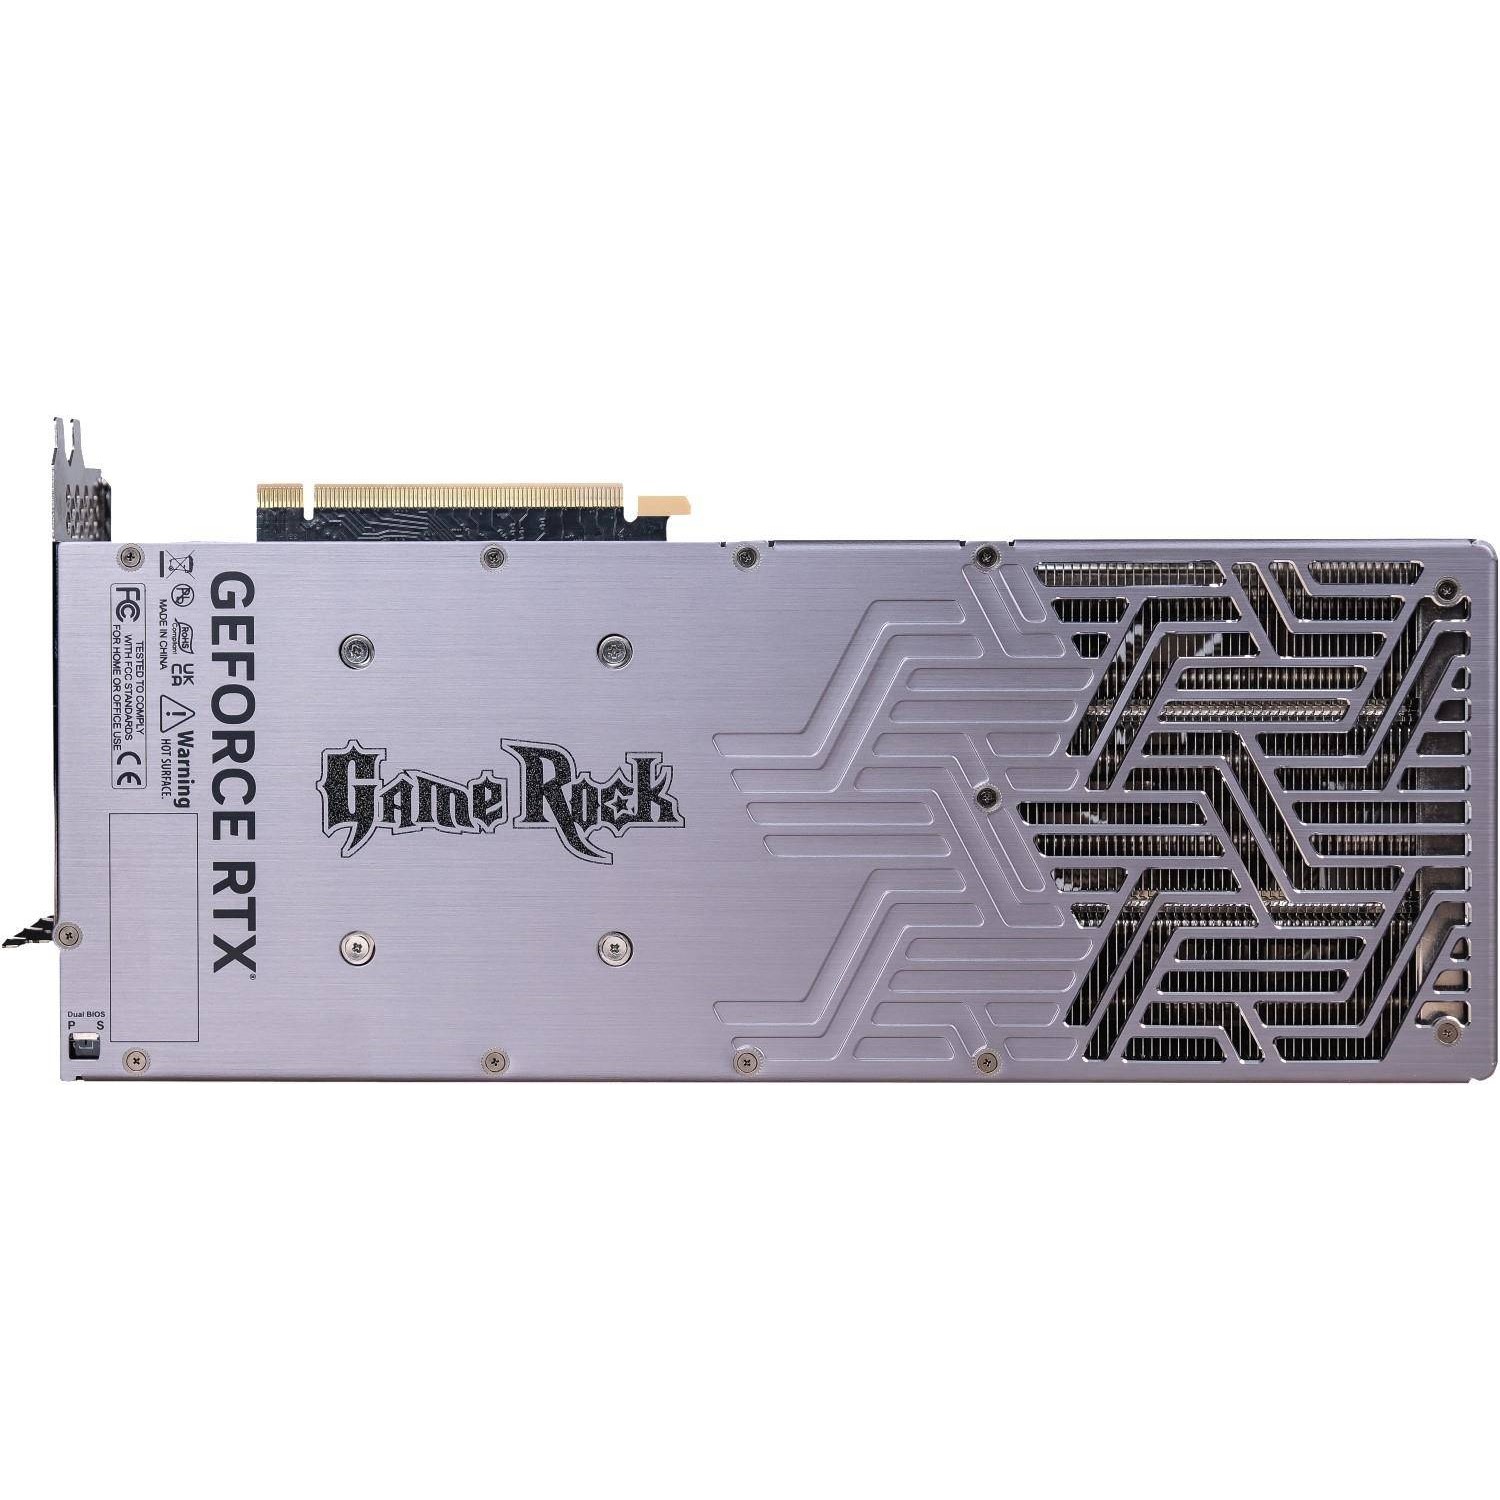  MSI GeForce RTX 4080 16GB SUPRIM X Gaming Graphics Card - 16GB  GDDR6X, 2640 MHz, PCI Express Gen 4, 256-bit, 3X DP v 1.4a, HDMI 2.1a  (Supports 4K & 8K HDR) : Electronics